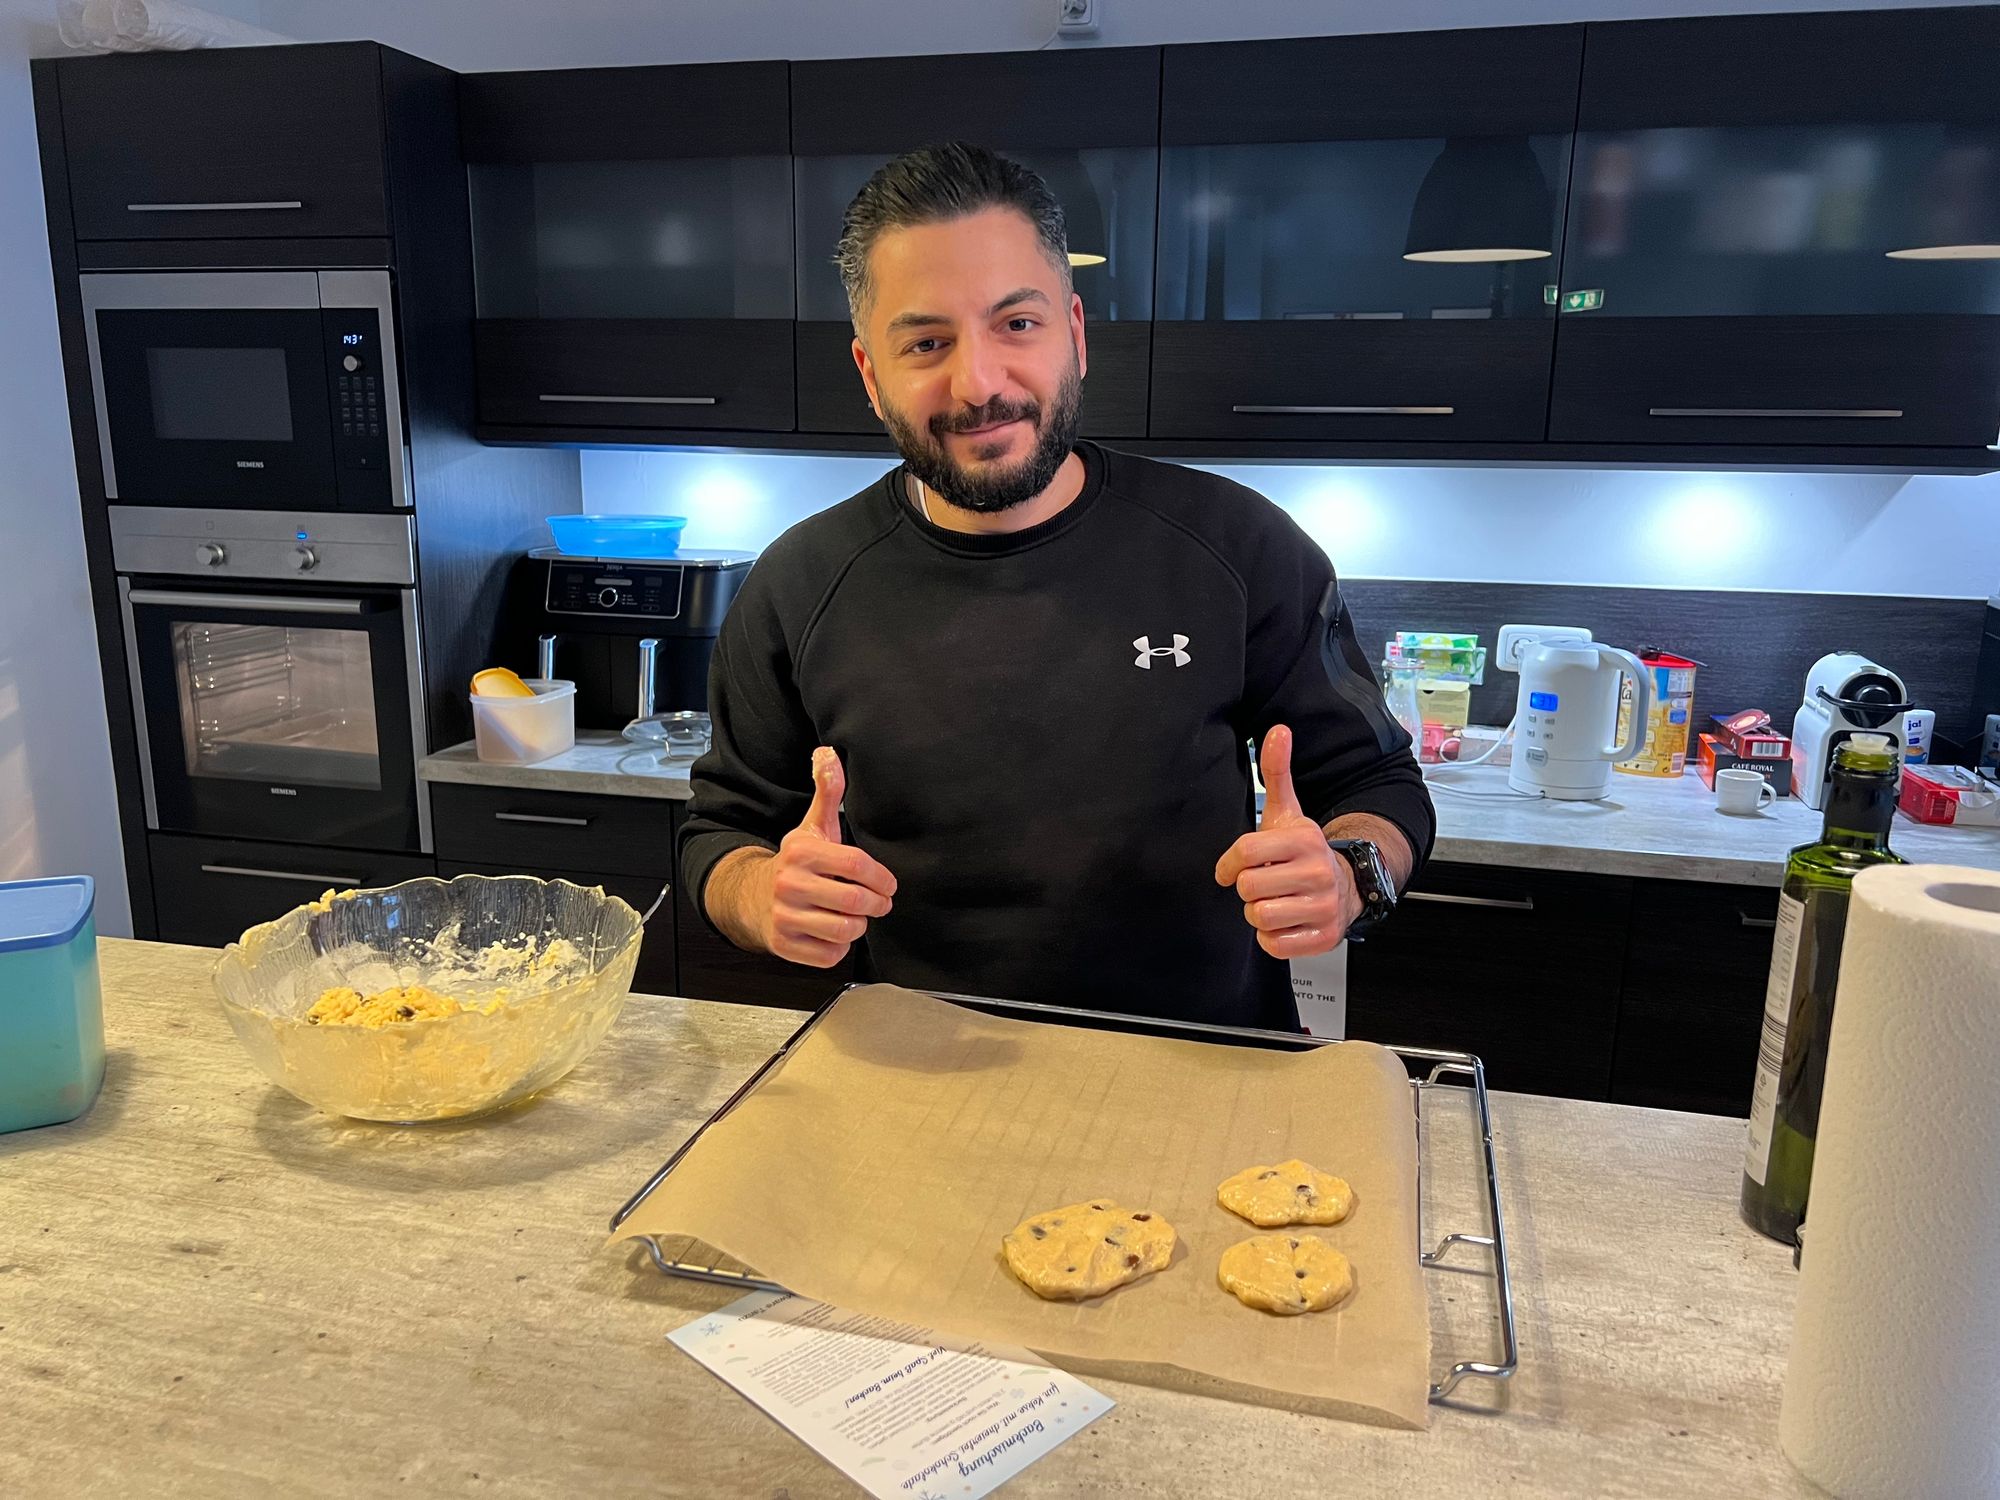 Cooking cookies with VMware